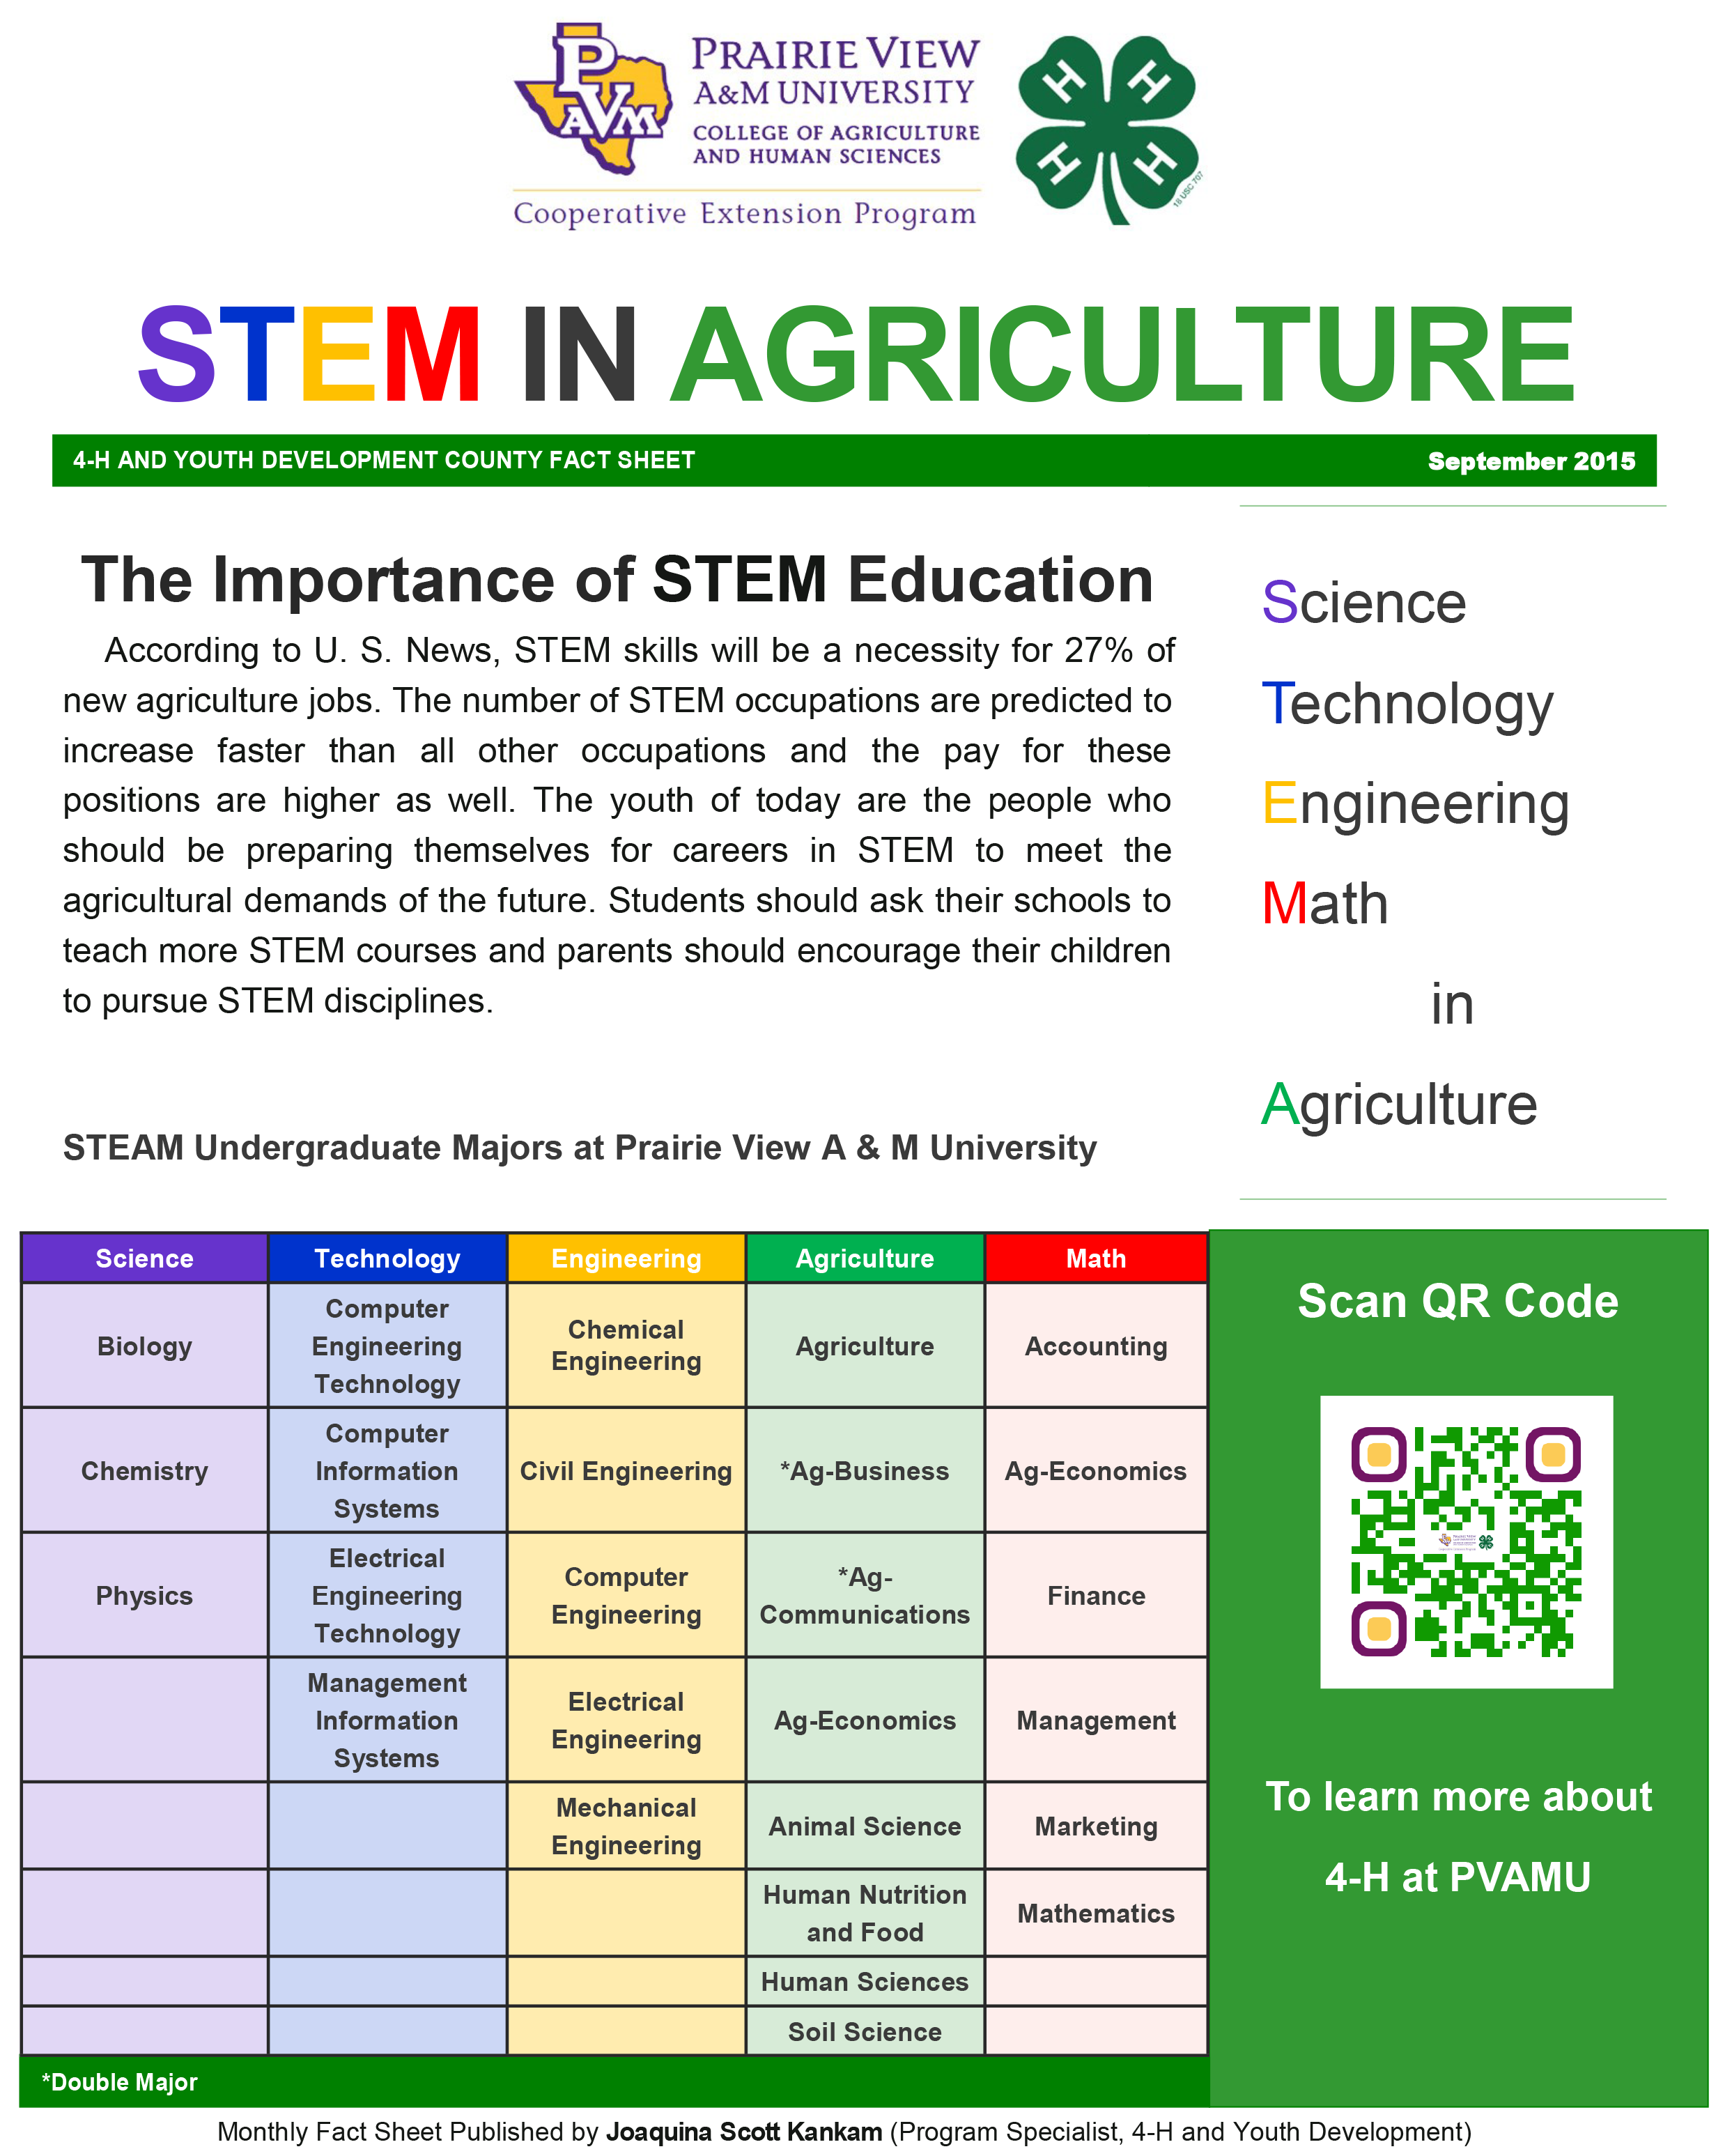 STEM in Agriculture Factsheet